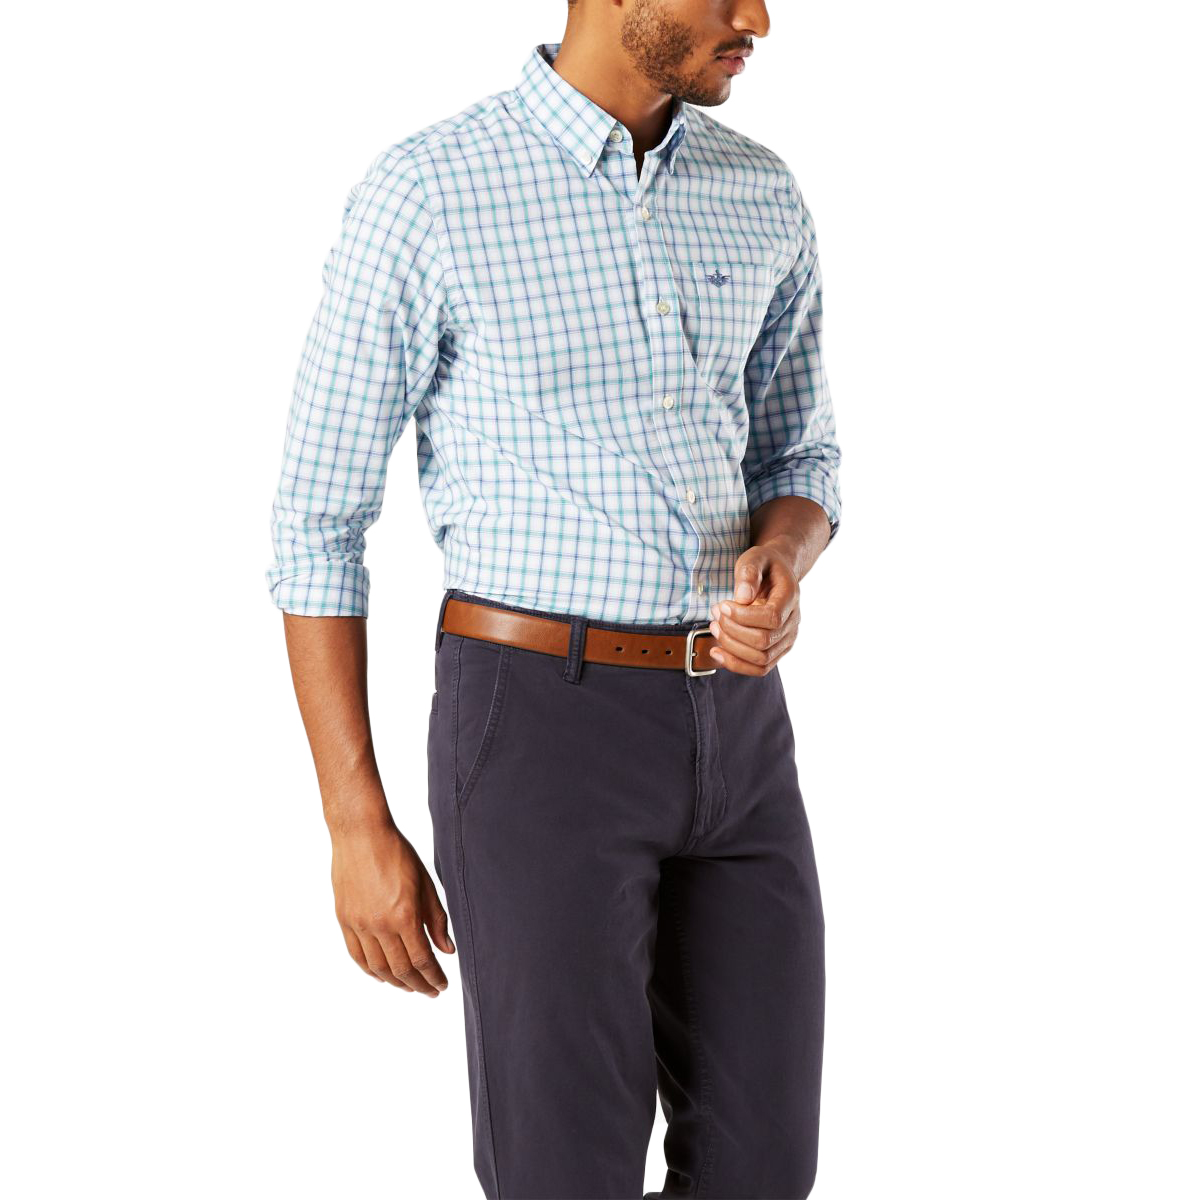 Dockers Men's Signature Comfort Flex Classic Fit Shirt - Various Patterns, XL